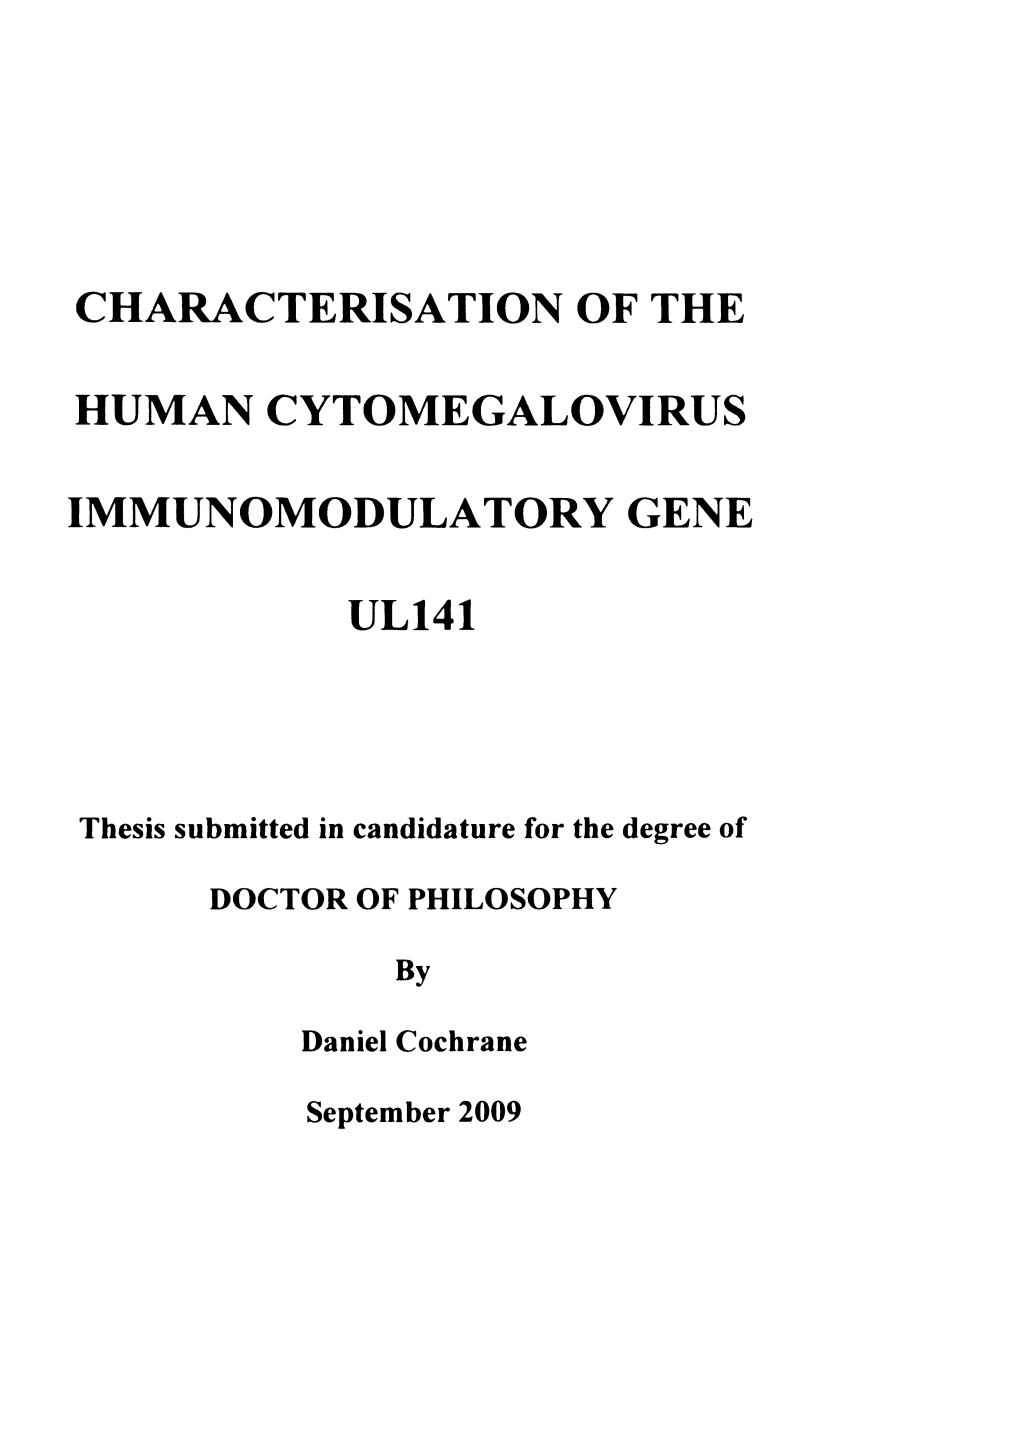 Characterisation of the Human Cytomegalovirus